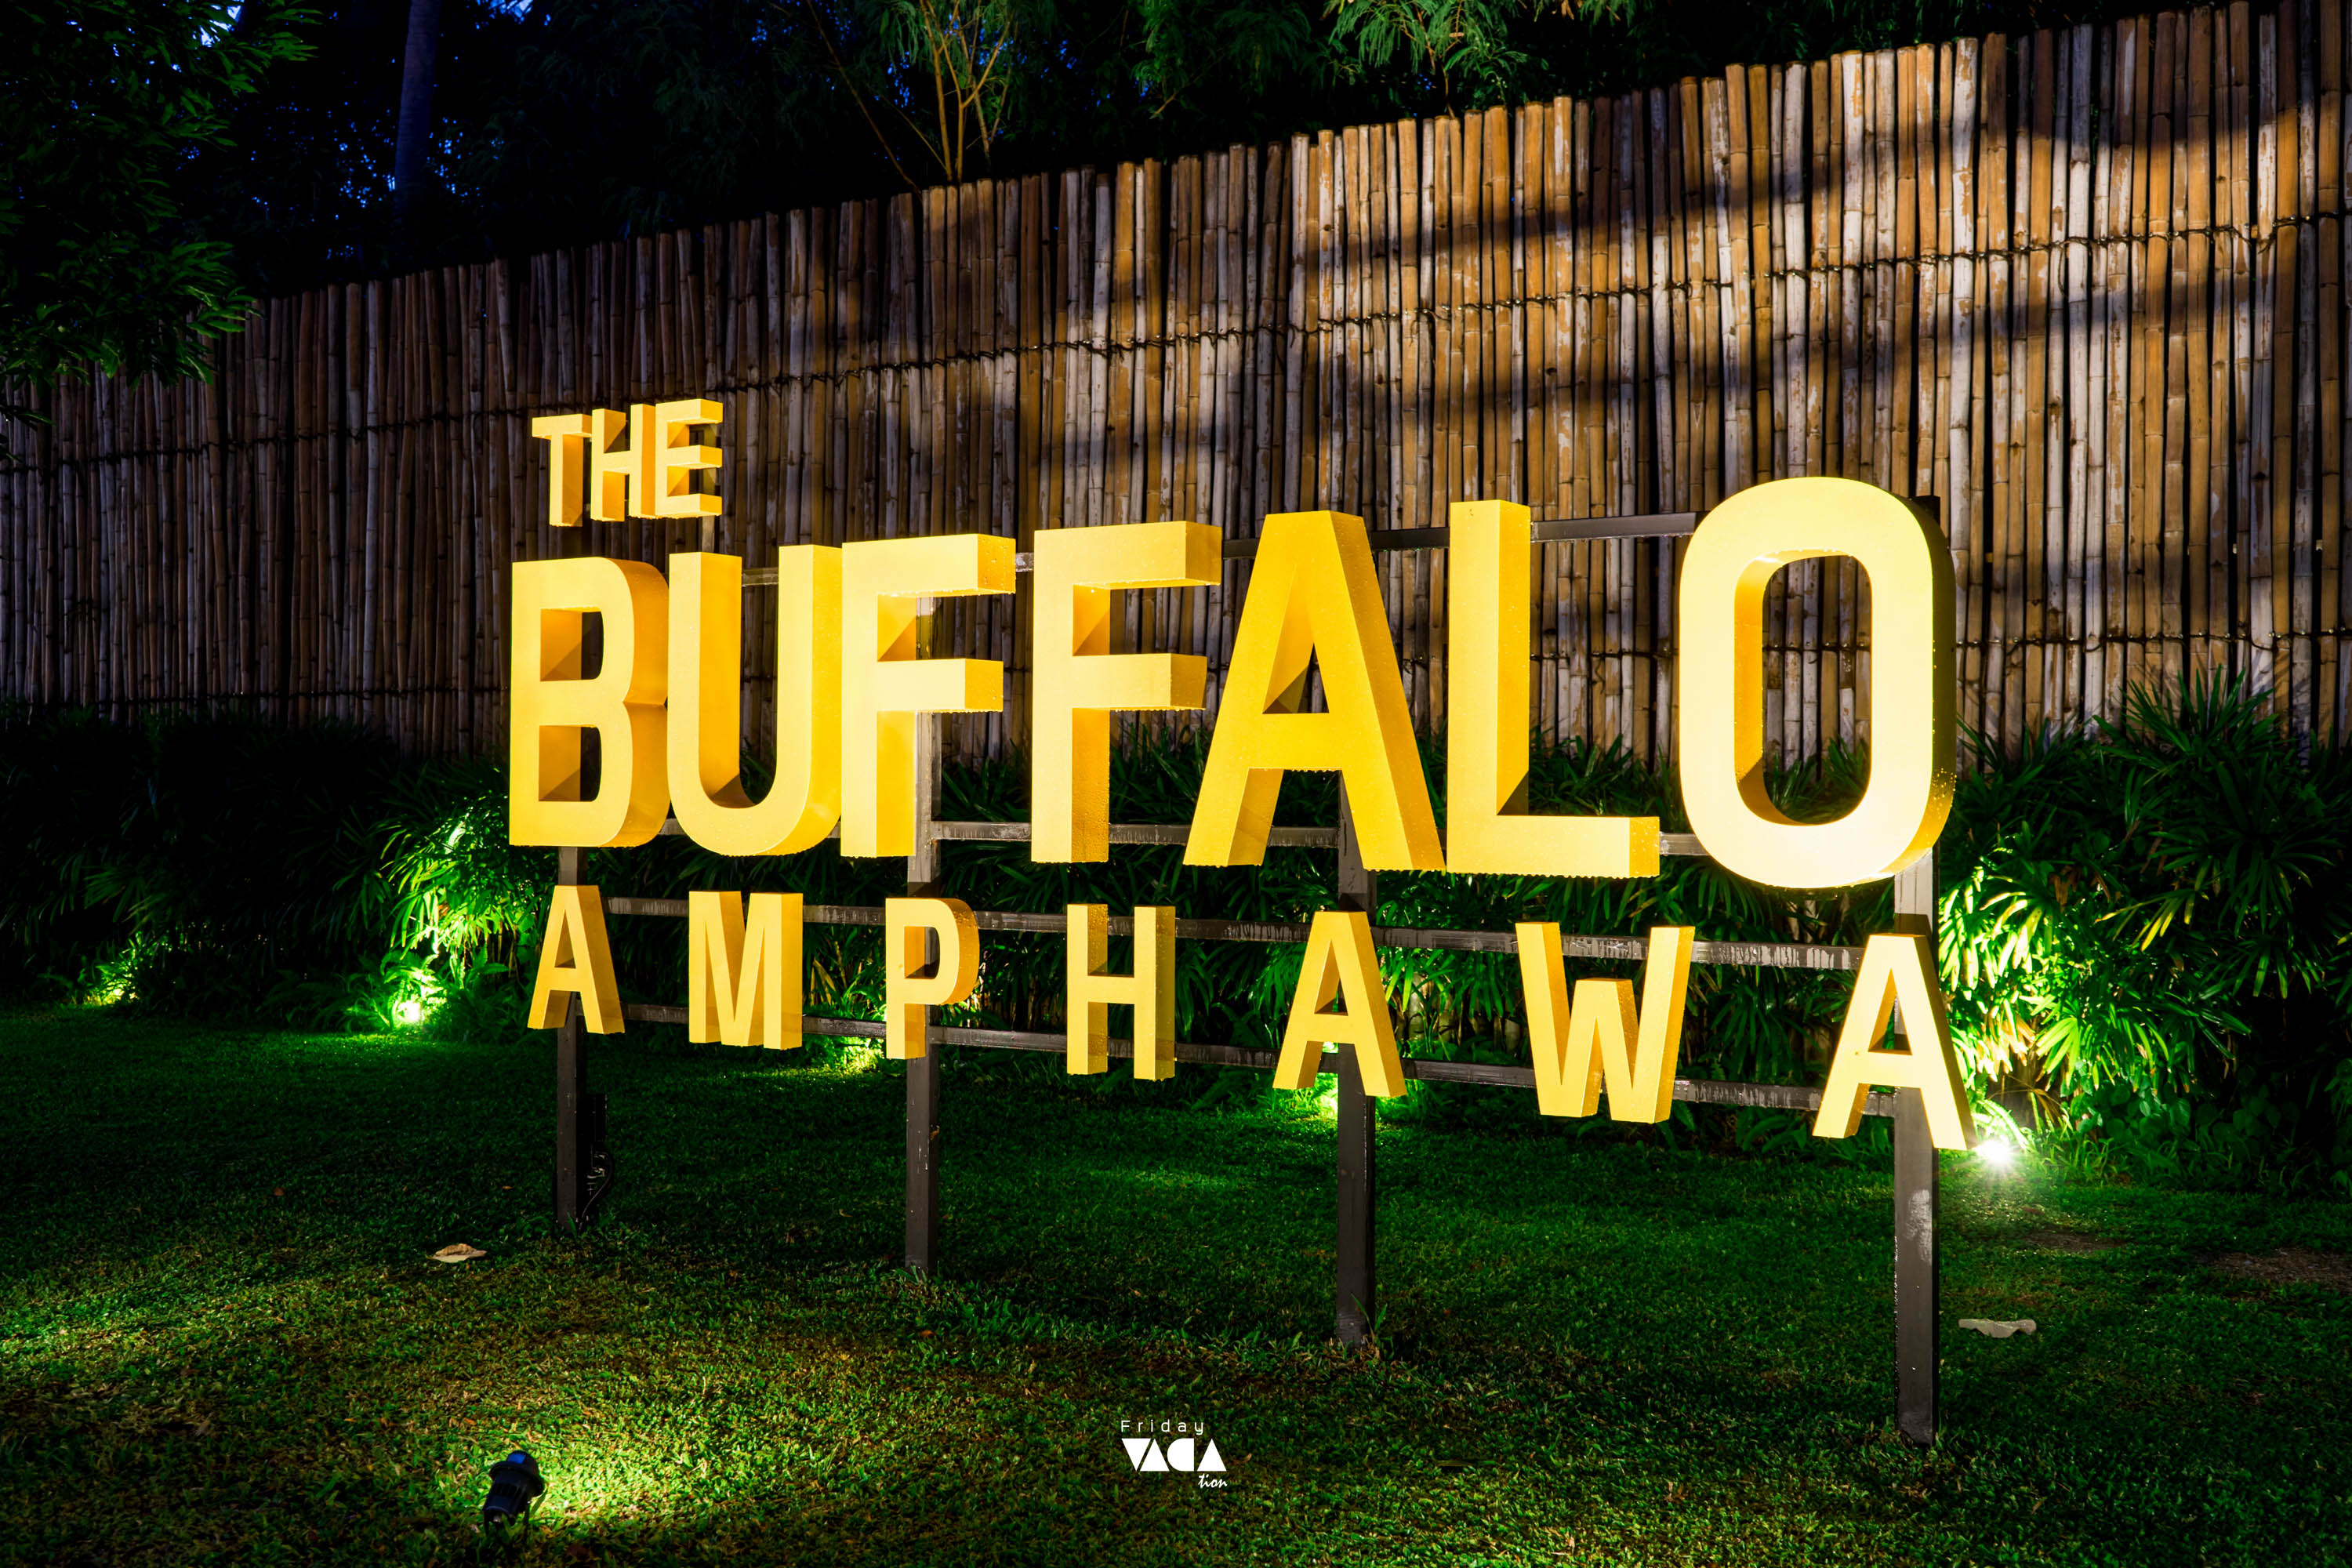 The buffalo Amphawa ที่พักอัมพวาเปิดใหม่